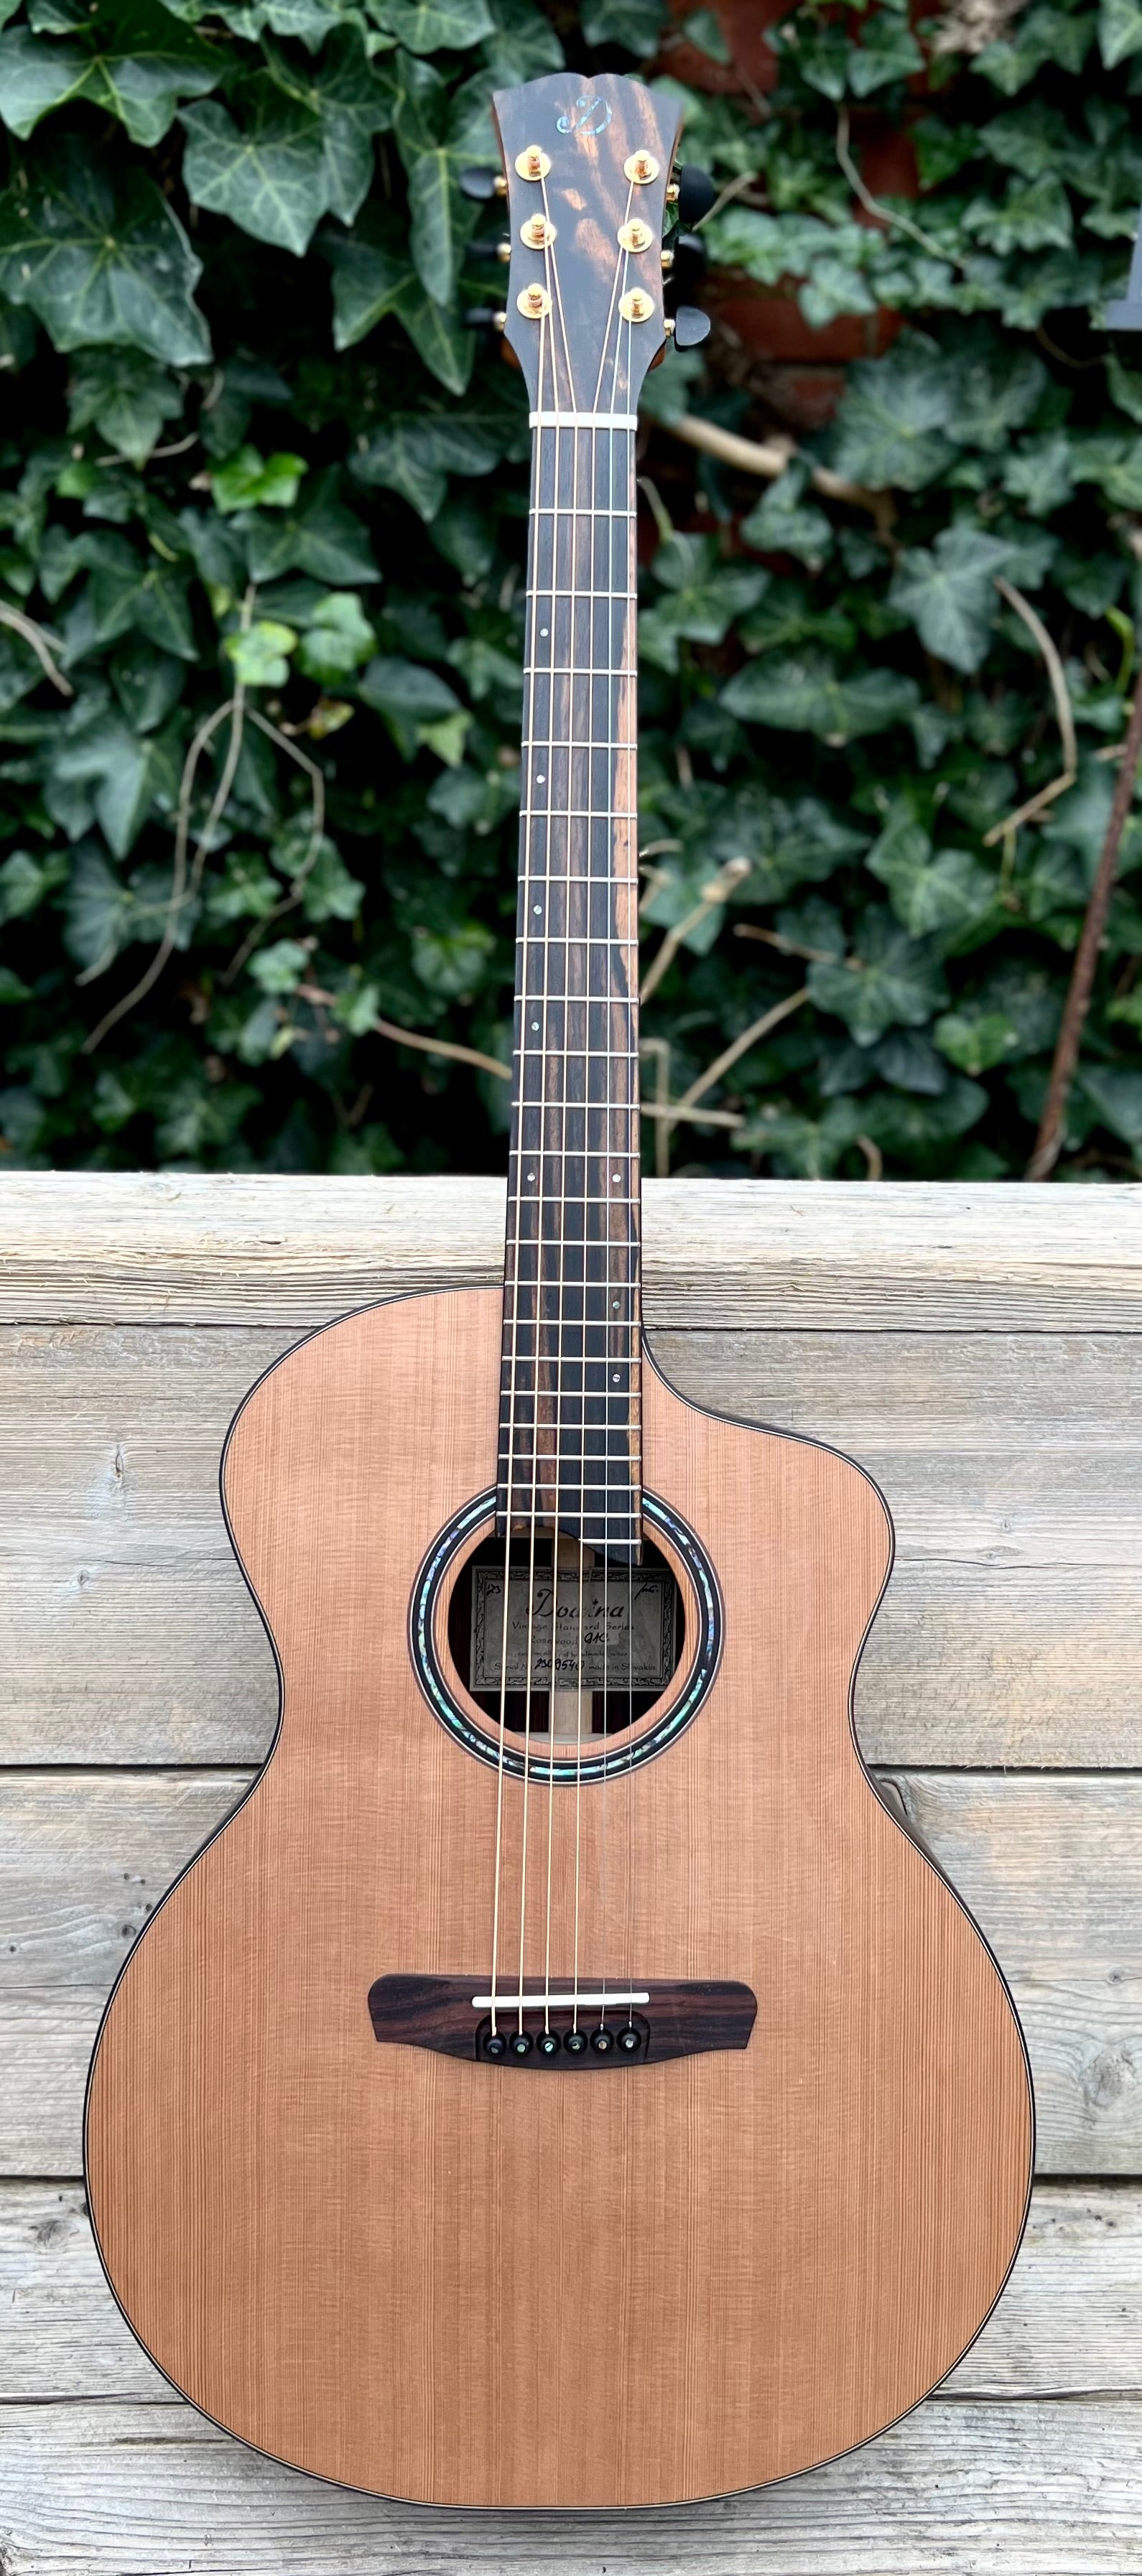 Dowina Rosewood GAC, Acoustic Guitar for sale at Richards Guitars.